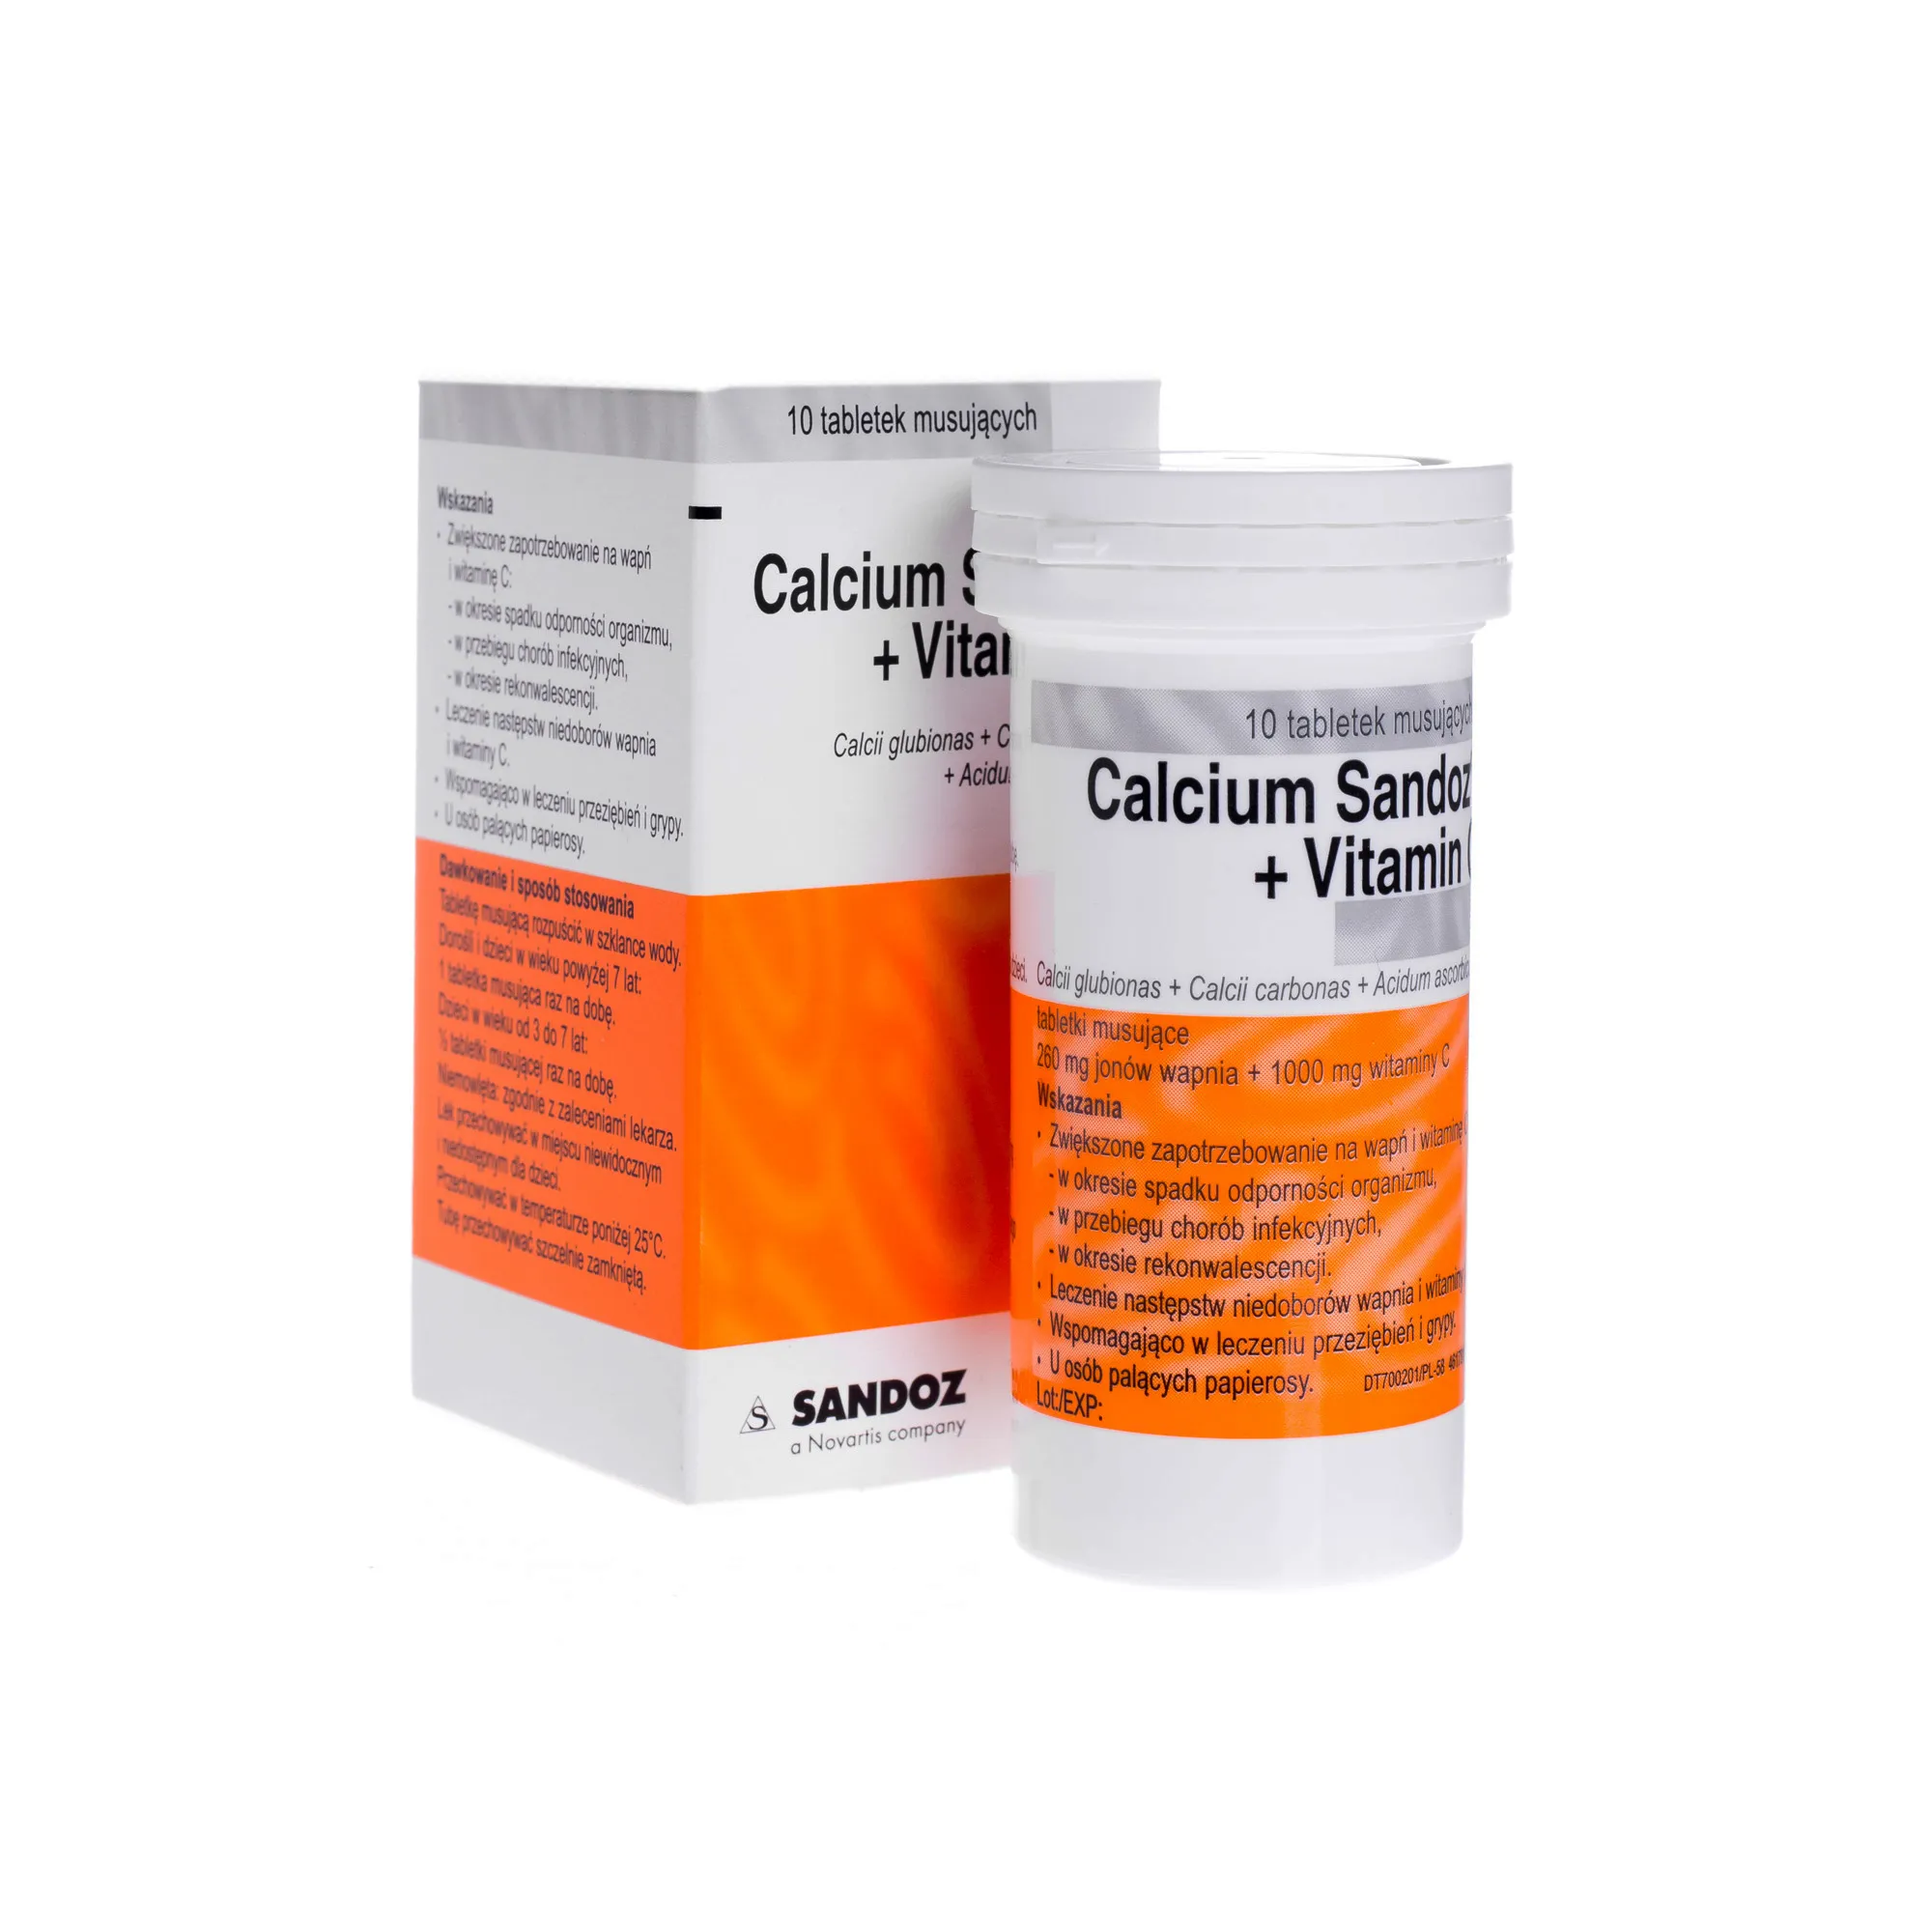 Calcium Sandoz + Vitamin C, 10 tabletek musujących